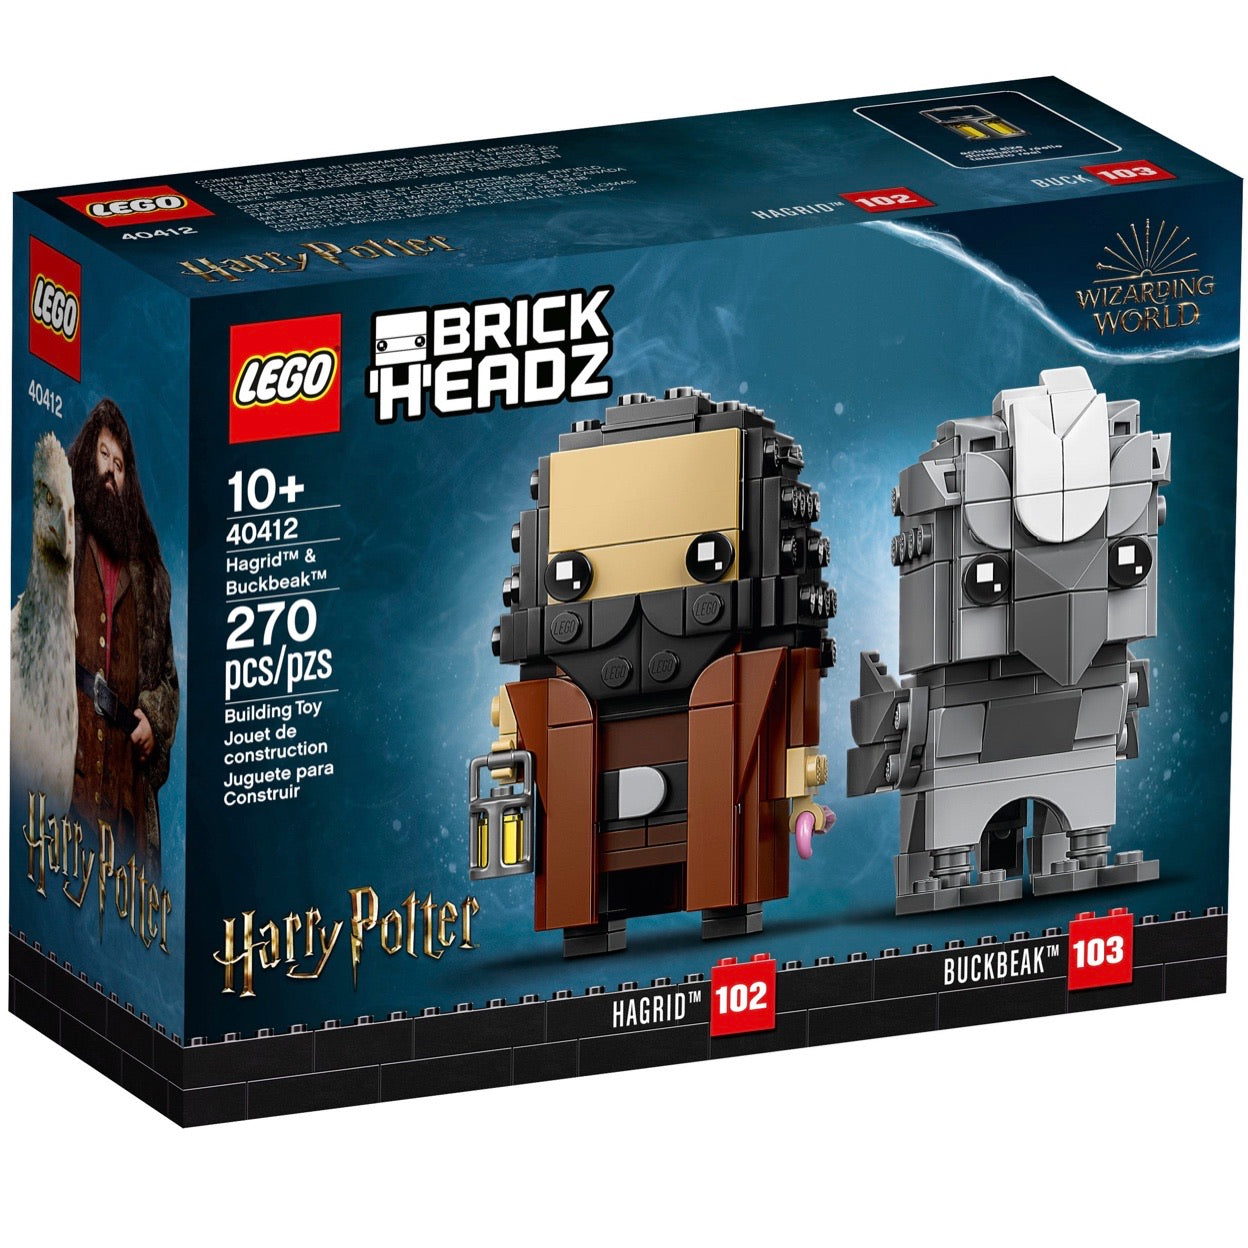 Retired Set 40412 Harry Potter BrickHeadz Hagrid and Buckbeak